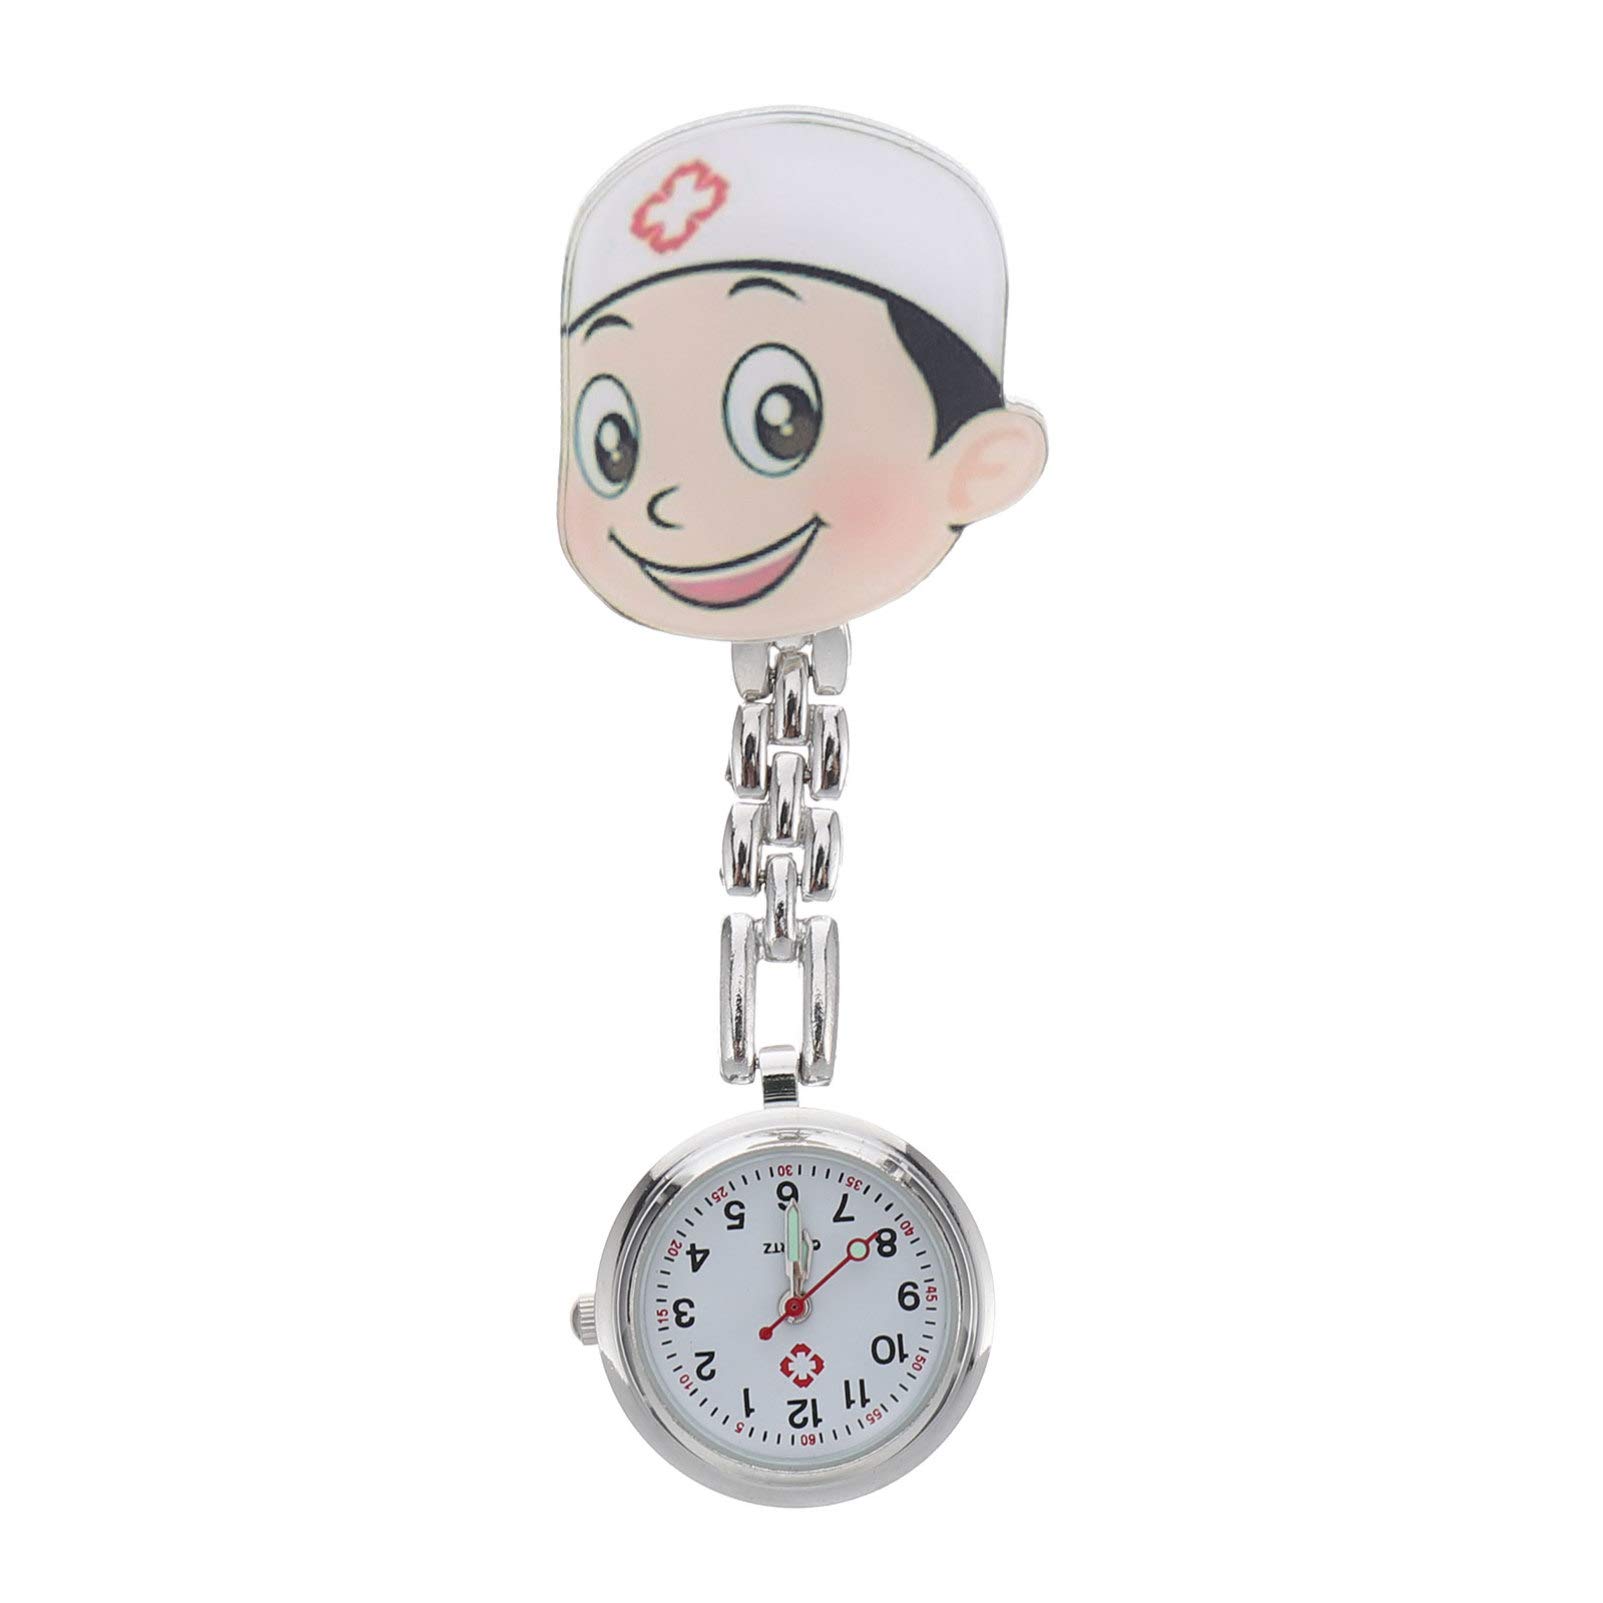 Hemobllo Nurse Watch, Clip on Nursing Watches Cute Cartoon Nurse Watches Nurse Lapel Watches Nurse Fob Watches Nurse Pocket Watch Nurse Gifts